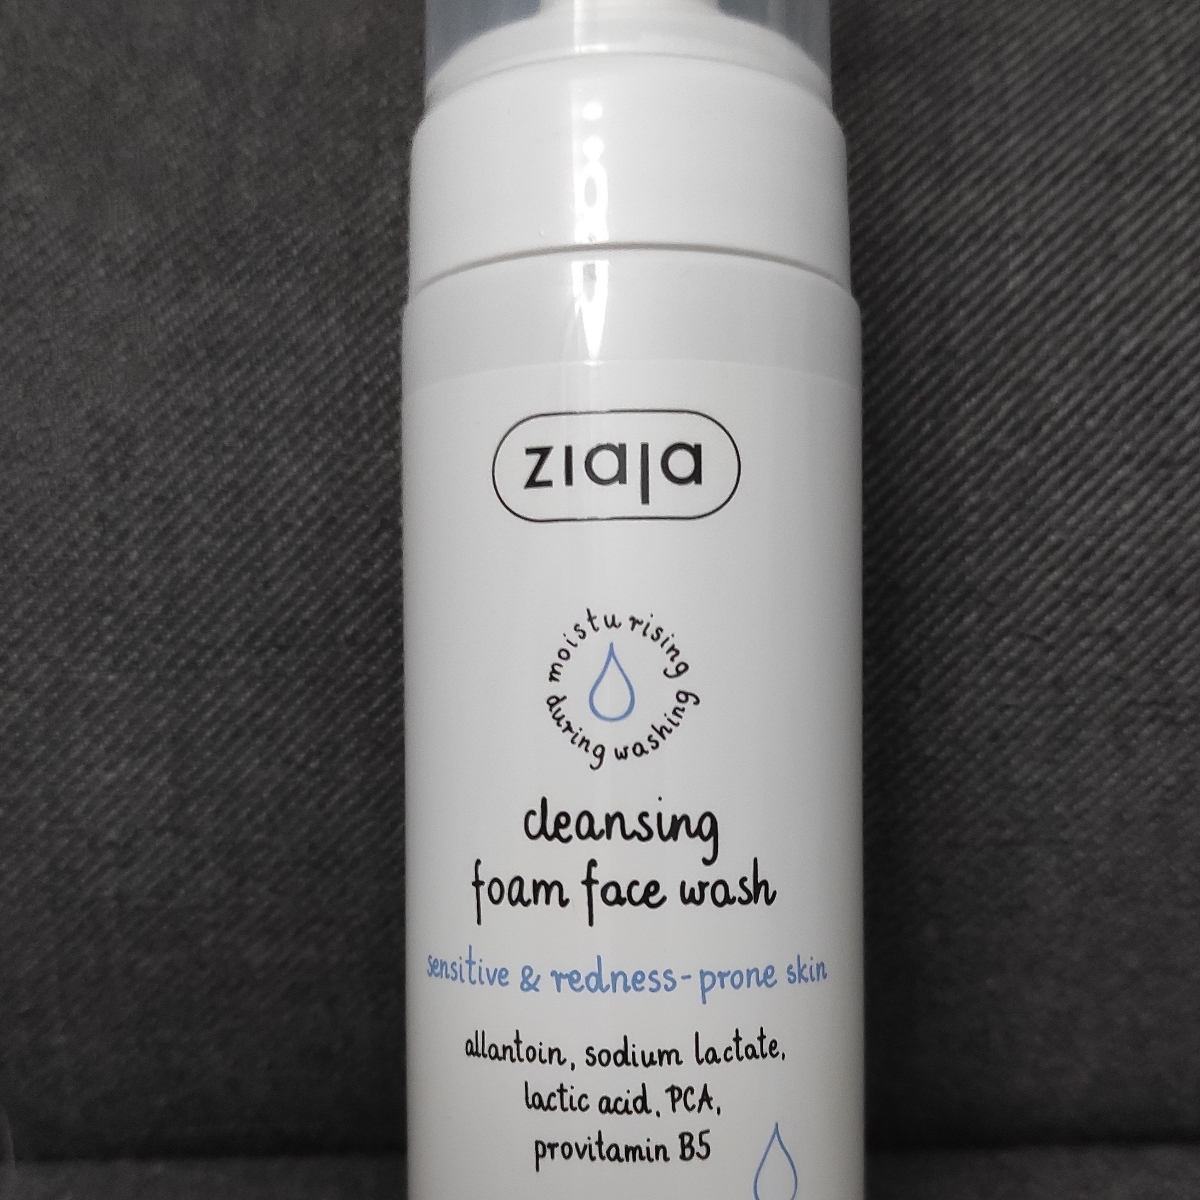 Cleansing Foam for Normal Skin - Ziaja Cleansing Foam Face Wash